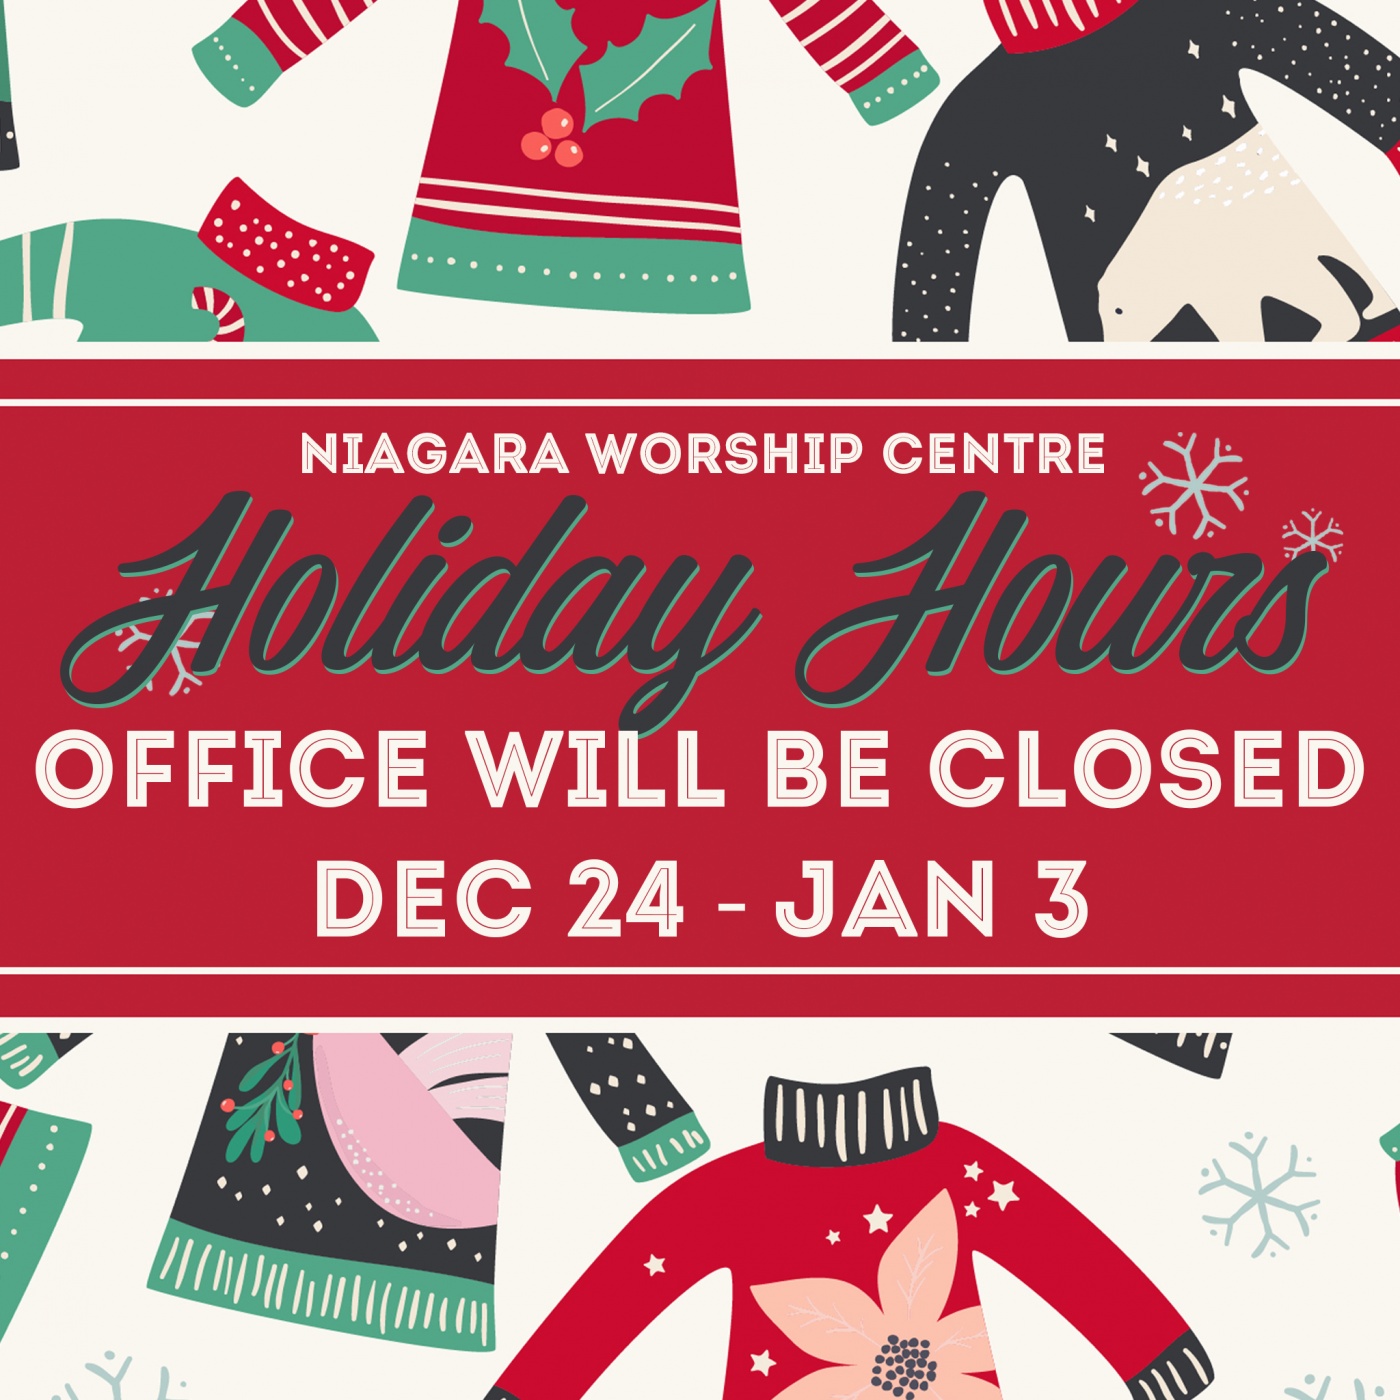 Office Closed - Dec 24 - Jan 3